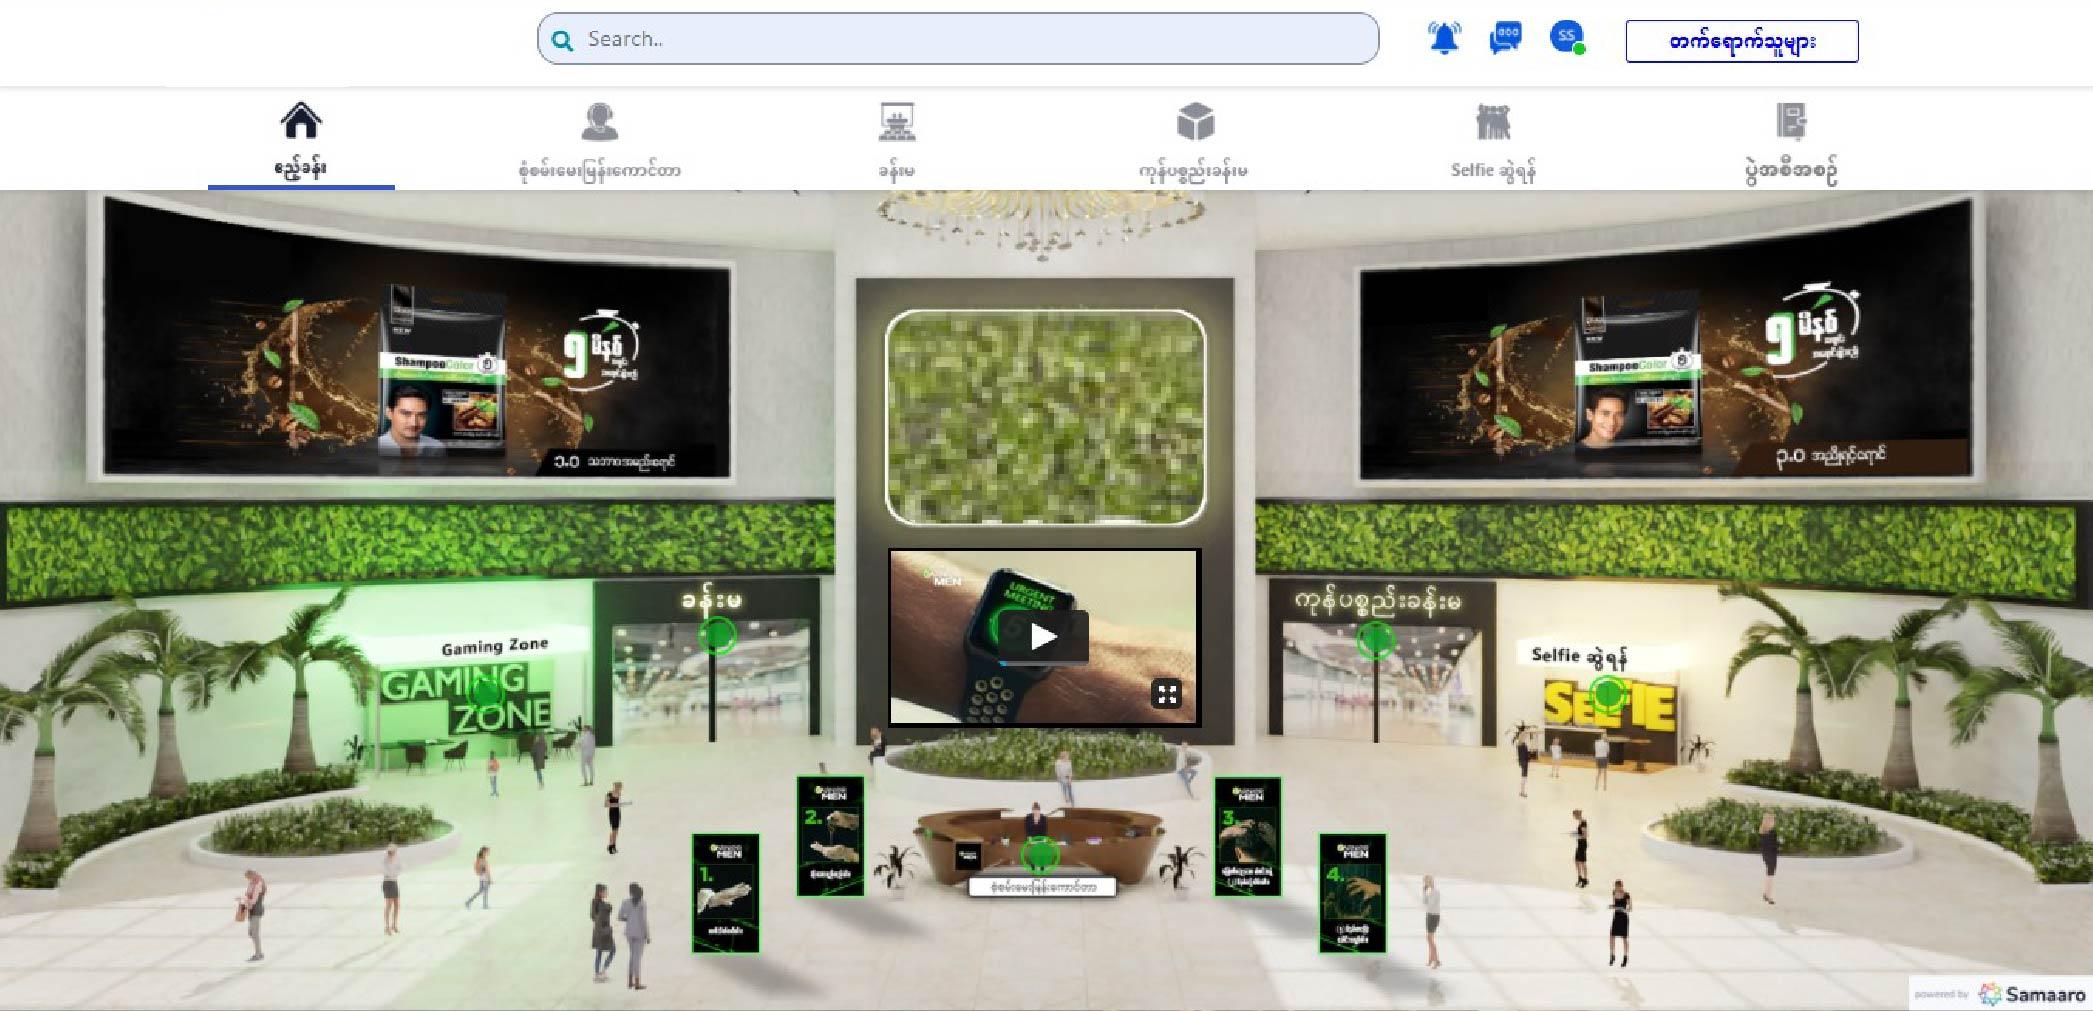 virtual product launch lobby